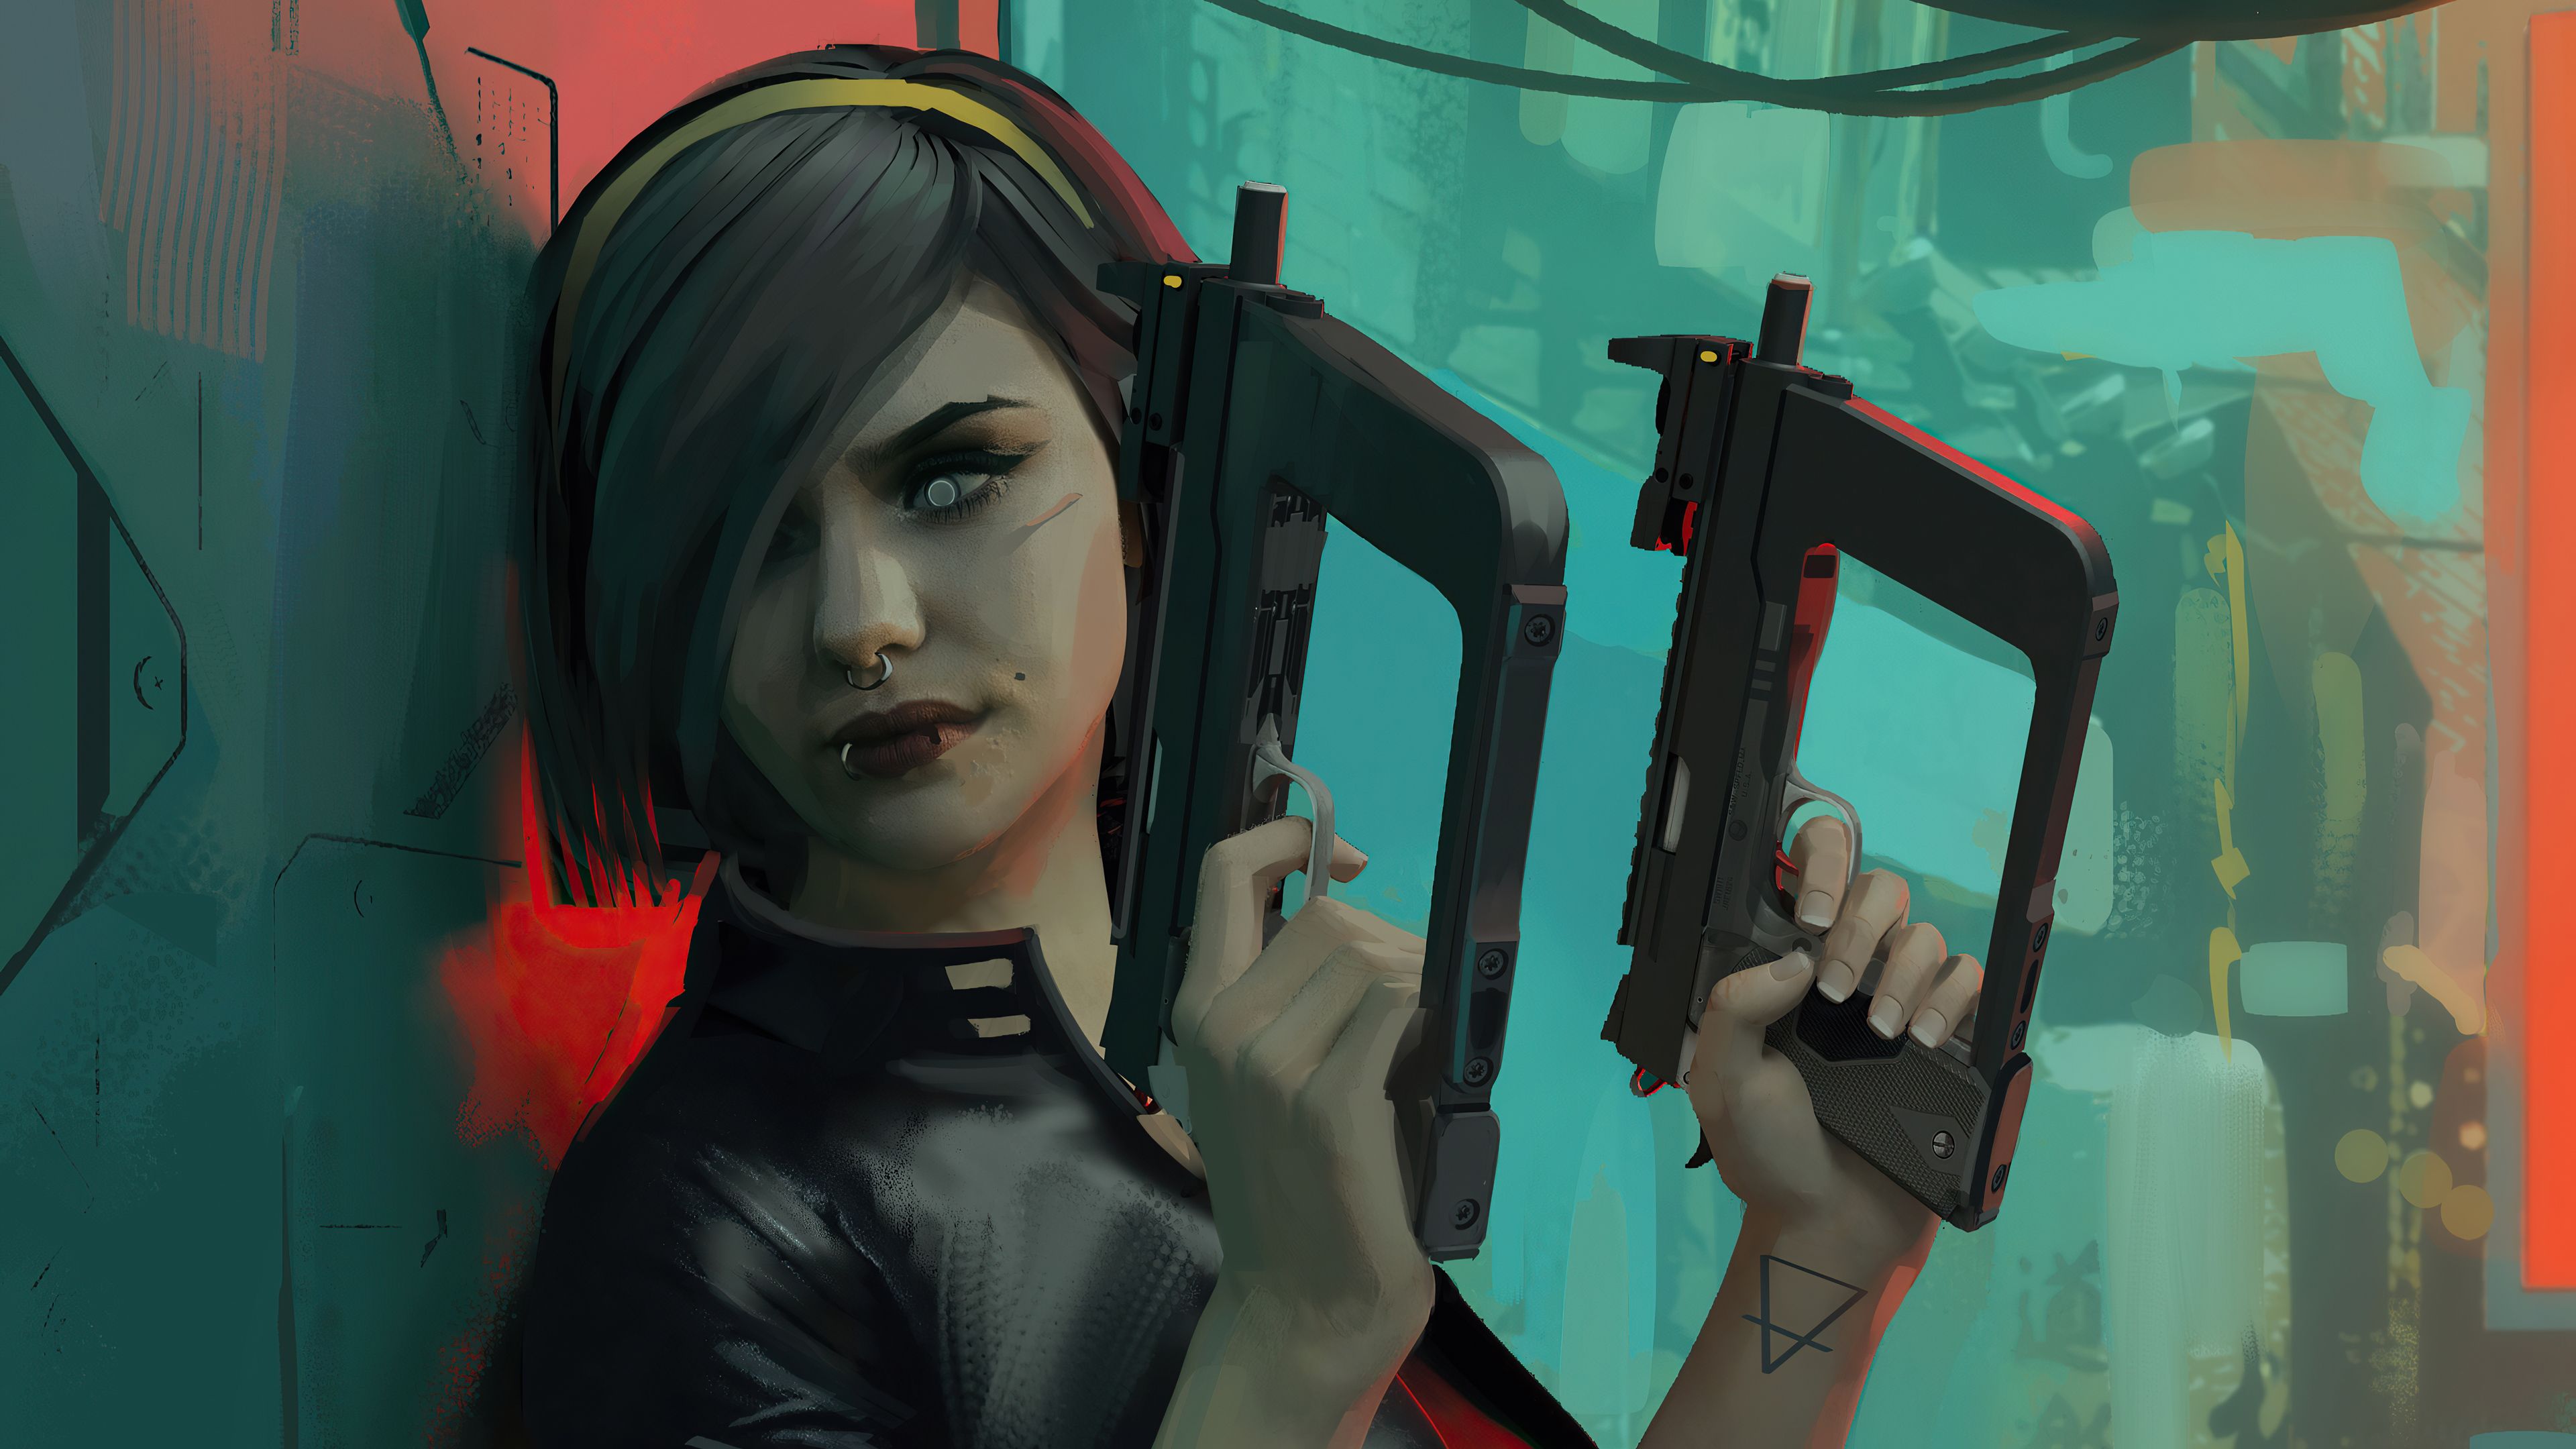 Dystopian Mafia Girl 4k, HD Artist, 4k Wallpaper, Image, Background, Photo and Picture